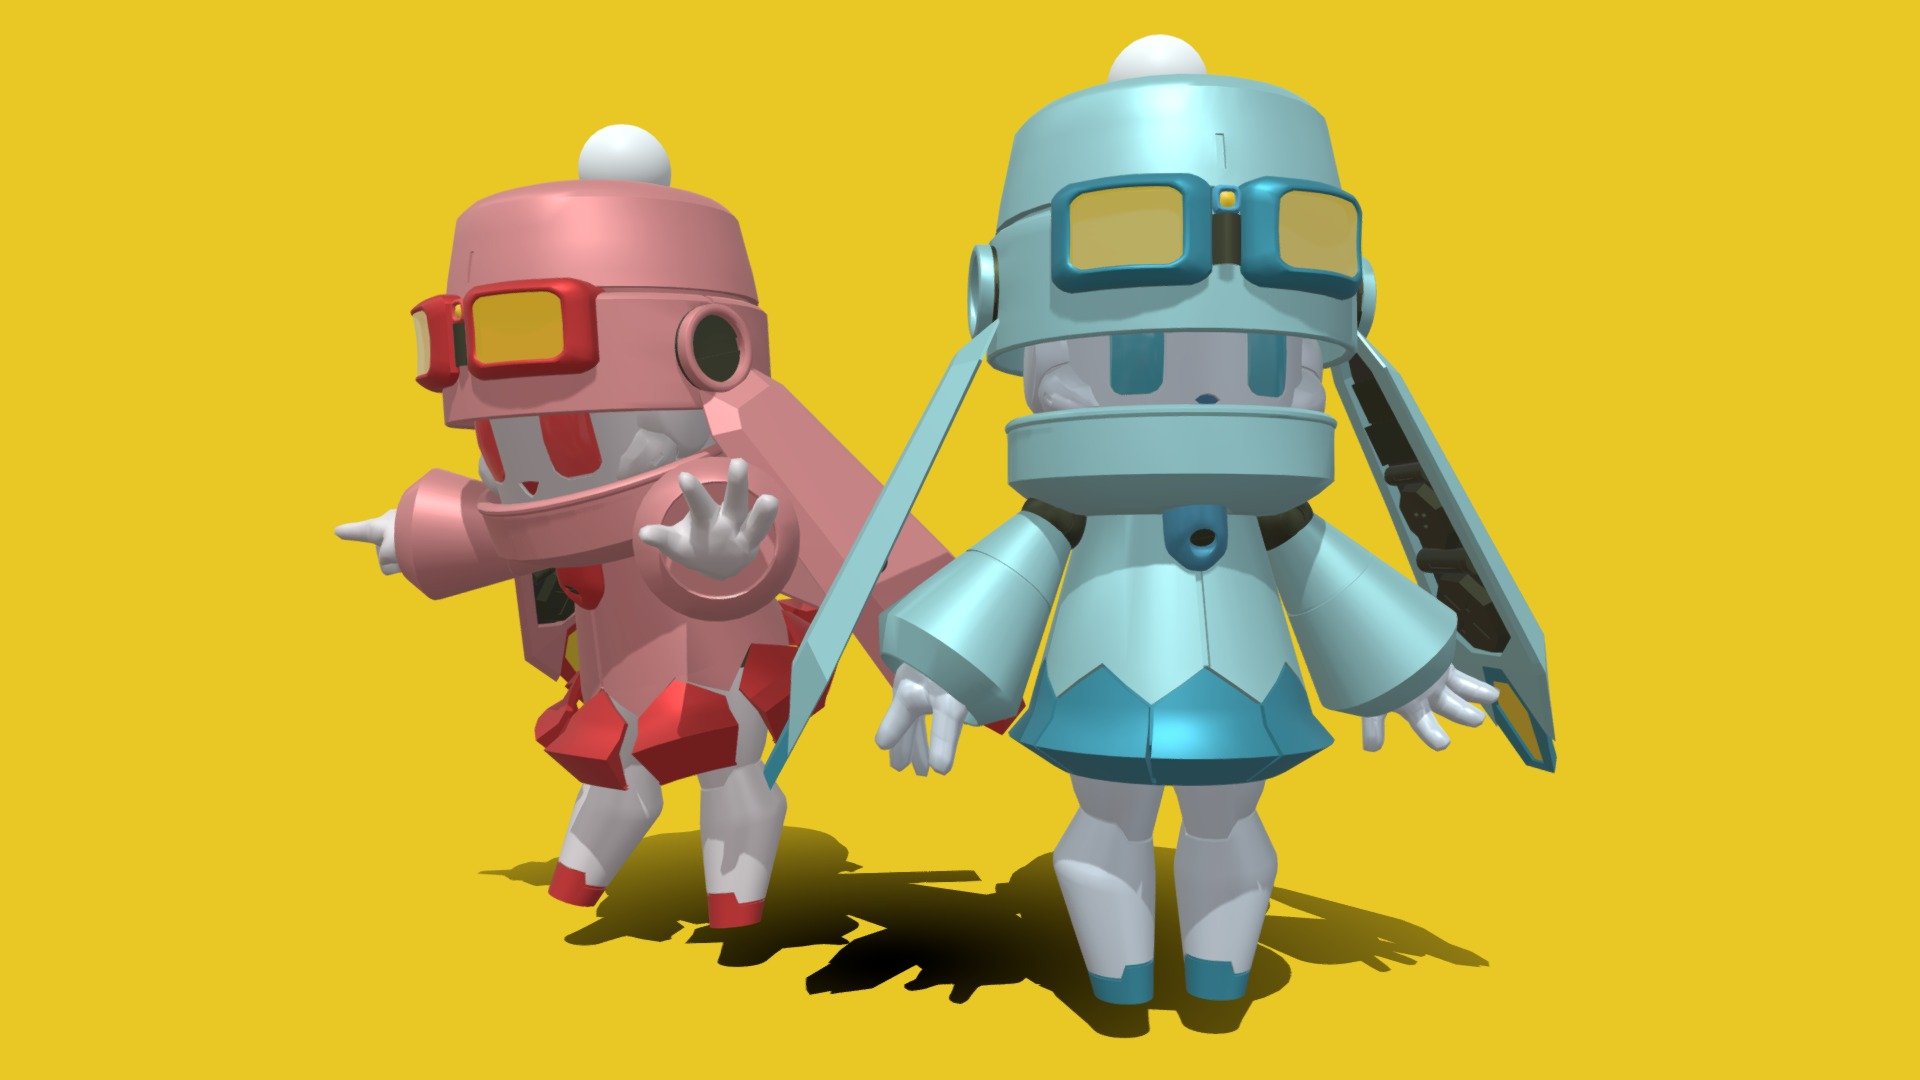 Cute pair of little robots!
Image reference from the artist kuruton486
https://twitter.com/kuruton486?lang=es - Fuyu Winter Robots - Download Free 3D model by Carl H (@CarlH3D) 3d model